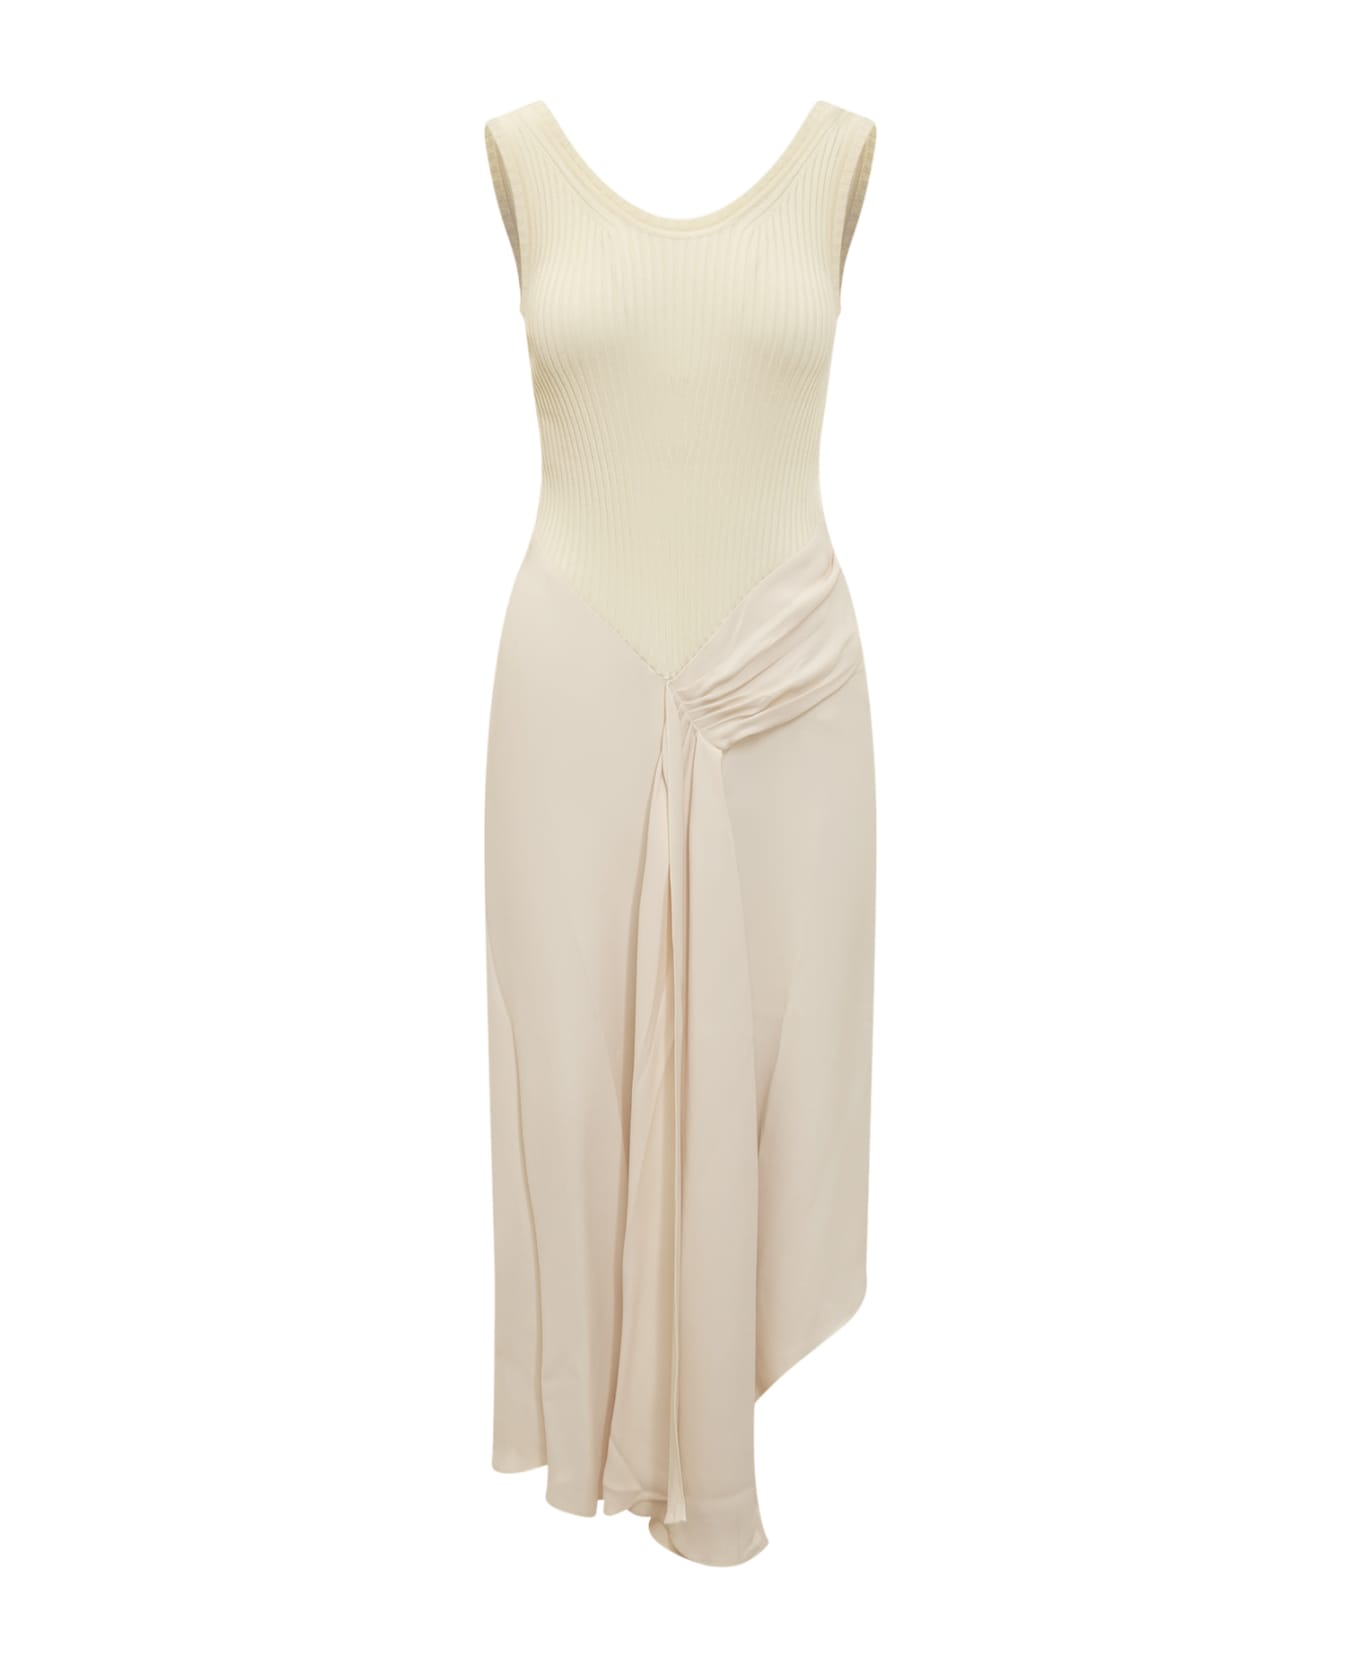 Victoria Beckham Asymmetrical Dress - CREAM